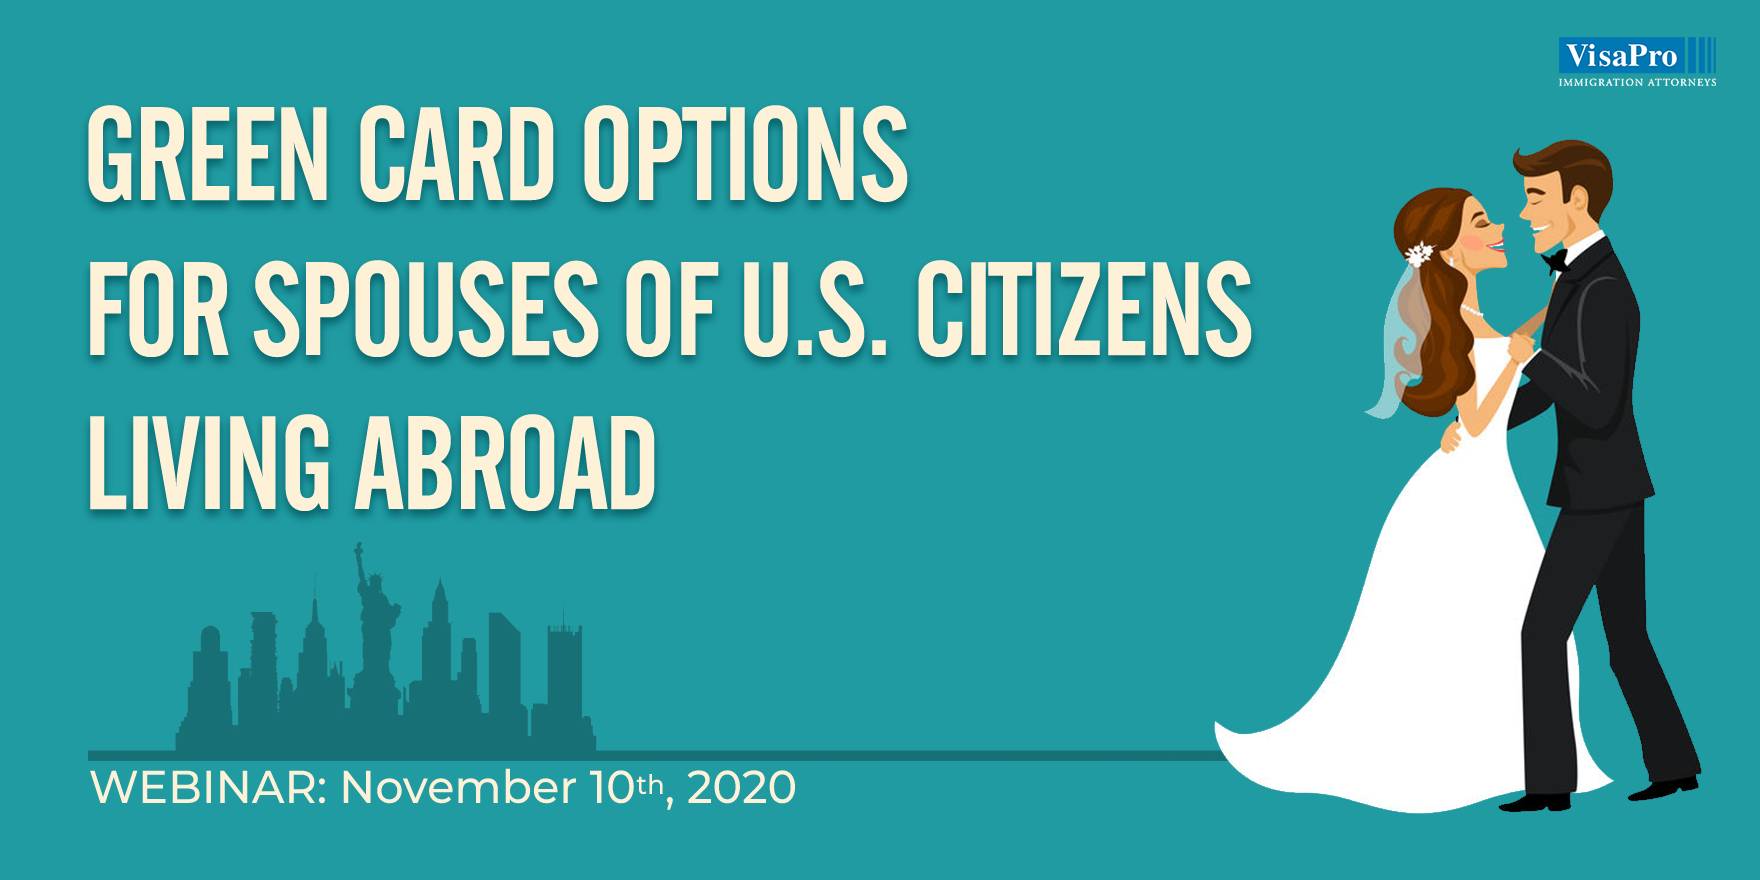 Green Card Options For Spouses of U.S. Citizens Living Abroad, Hanoi, Ha Noi, Vietnam